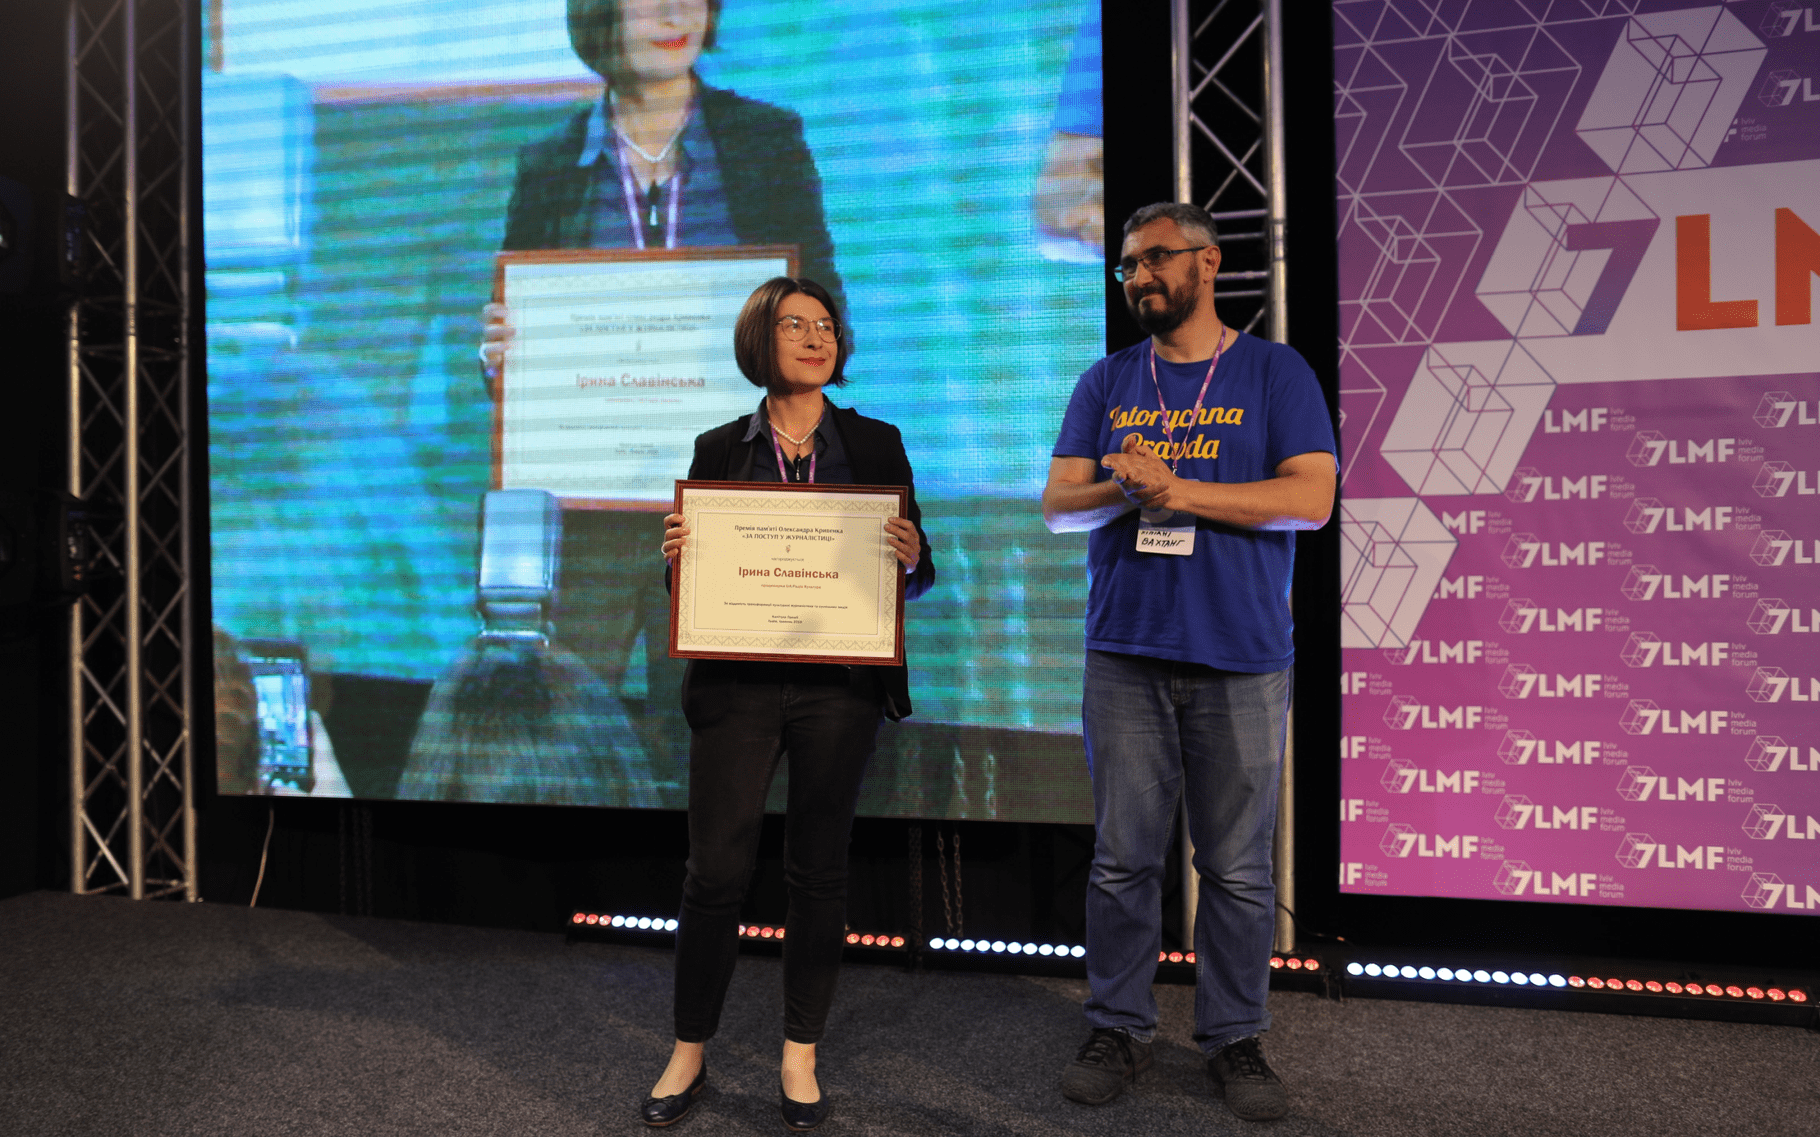 The 2019 Kryvenko Prize "For Progress in Journalism" was awarded to Iryna Slavinska